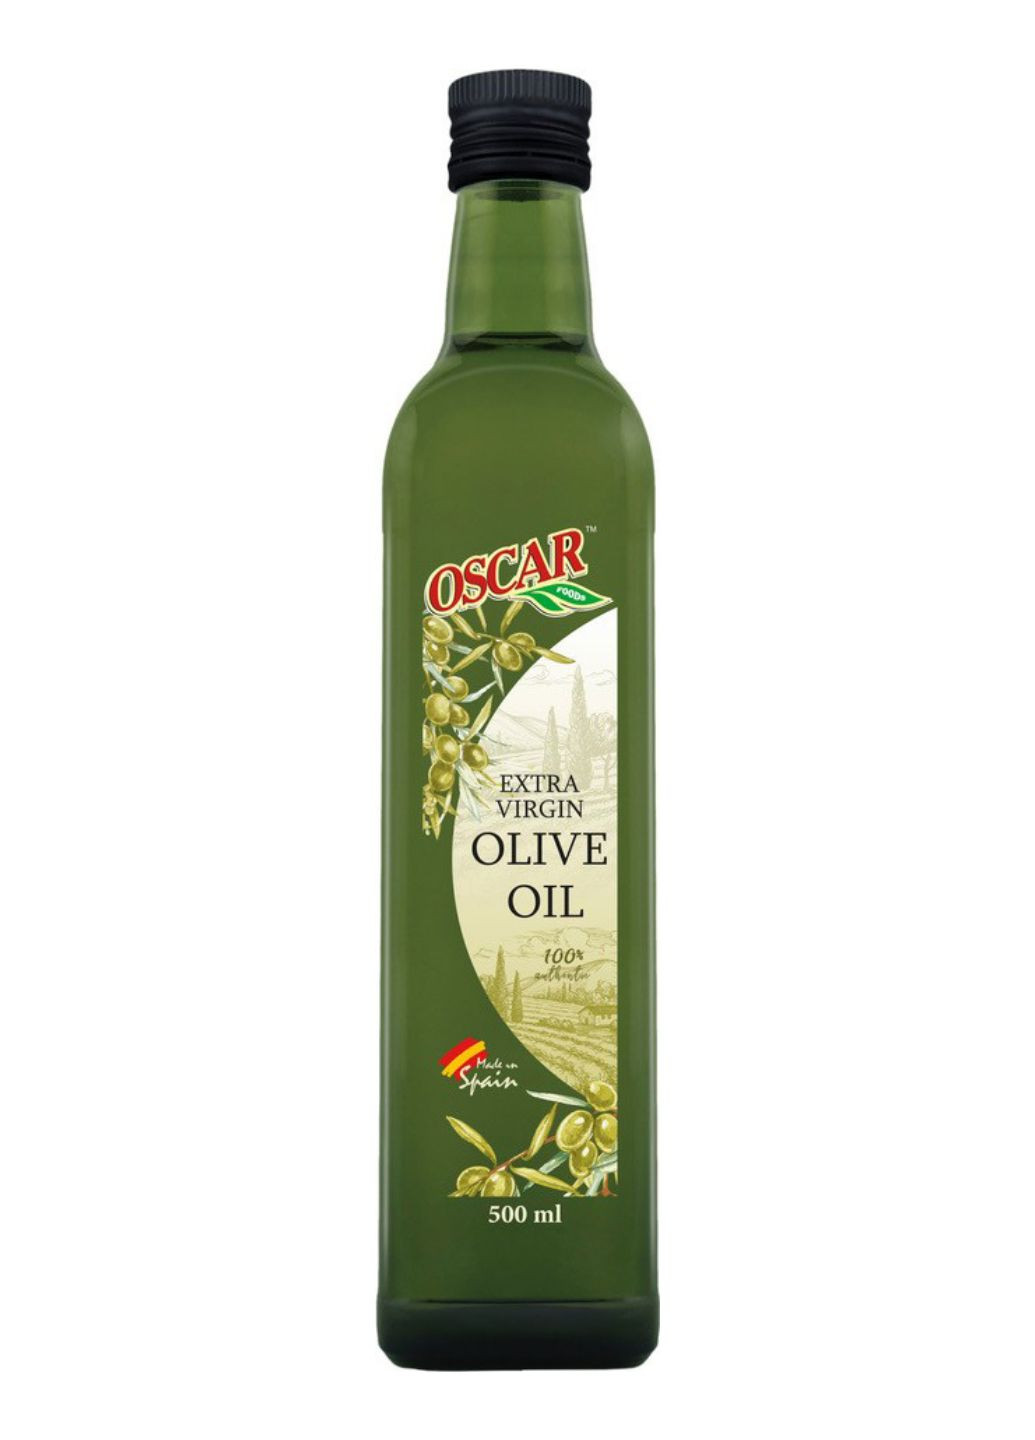 Олія оливкова нерафінована foods Extra Virgin 500 мл Oscar (262985504)